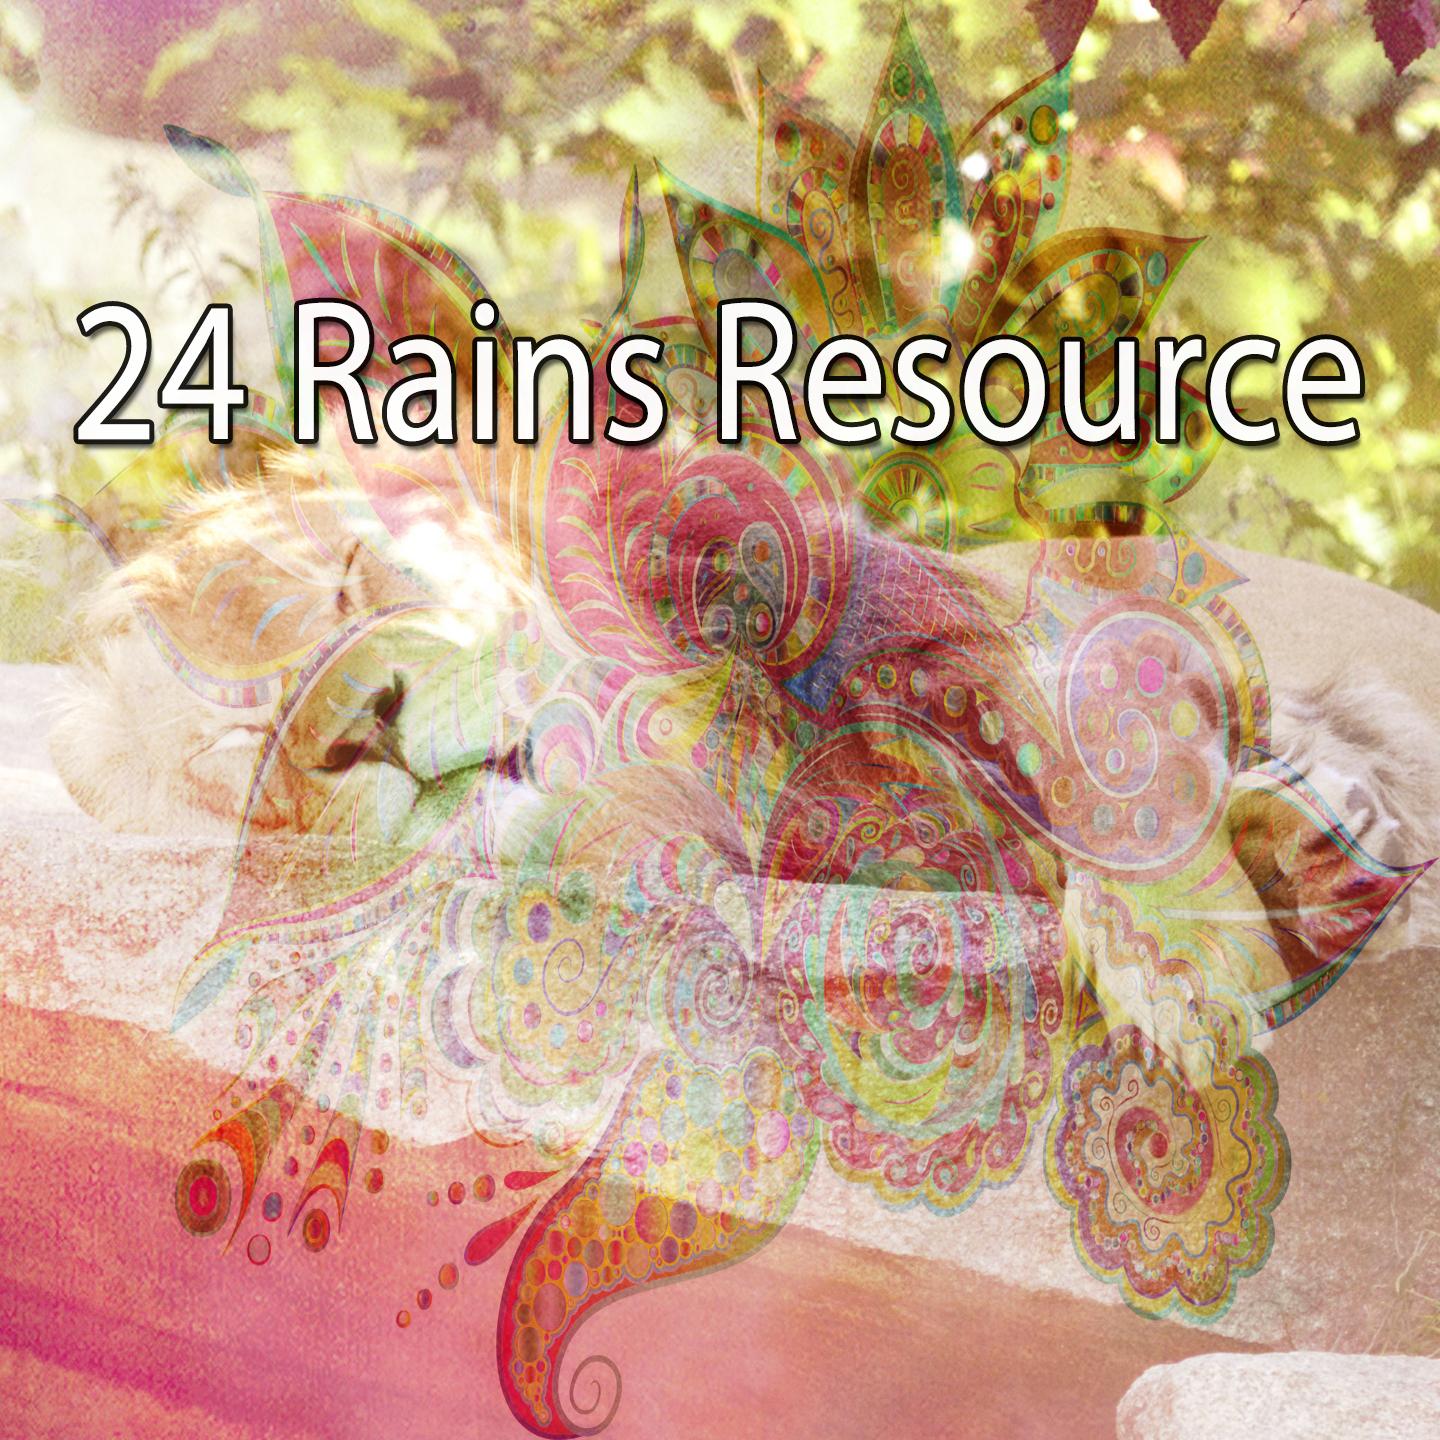 24 Rains Resource